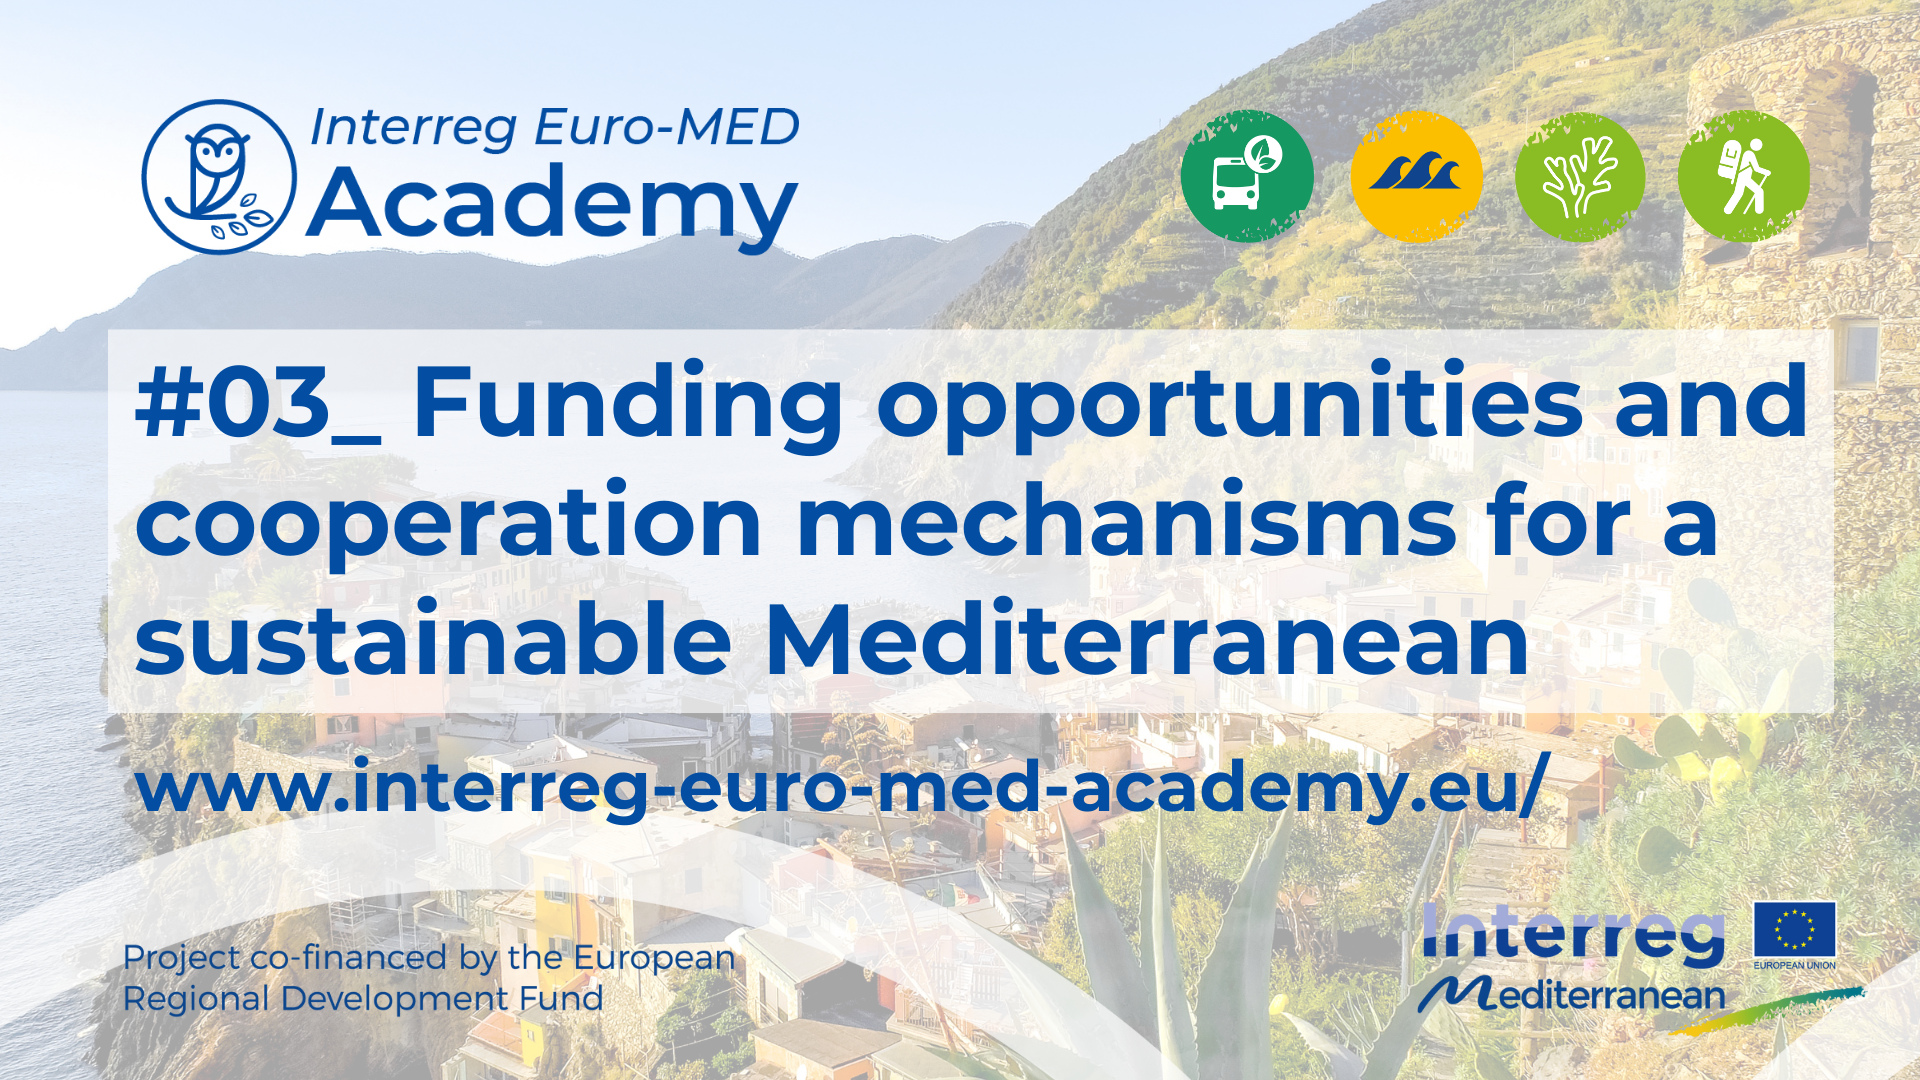 Interreg Euro-MED Academy Program on Funding Opportunities and Cooperation Mechanisms